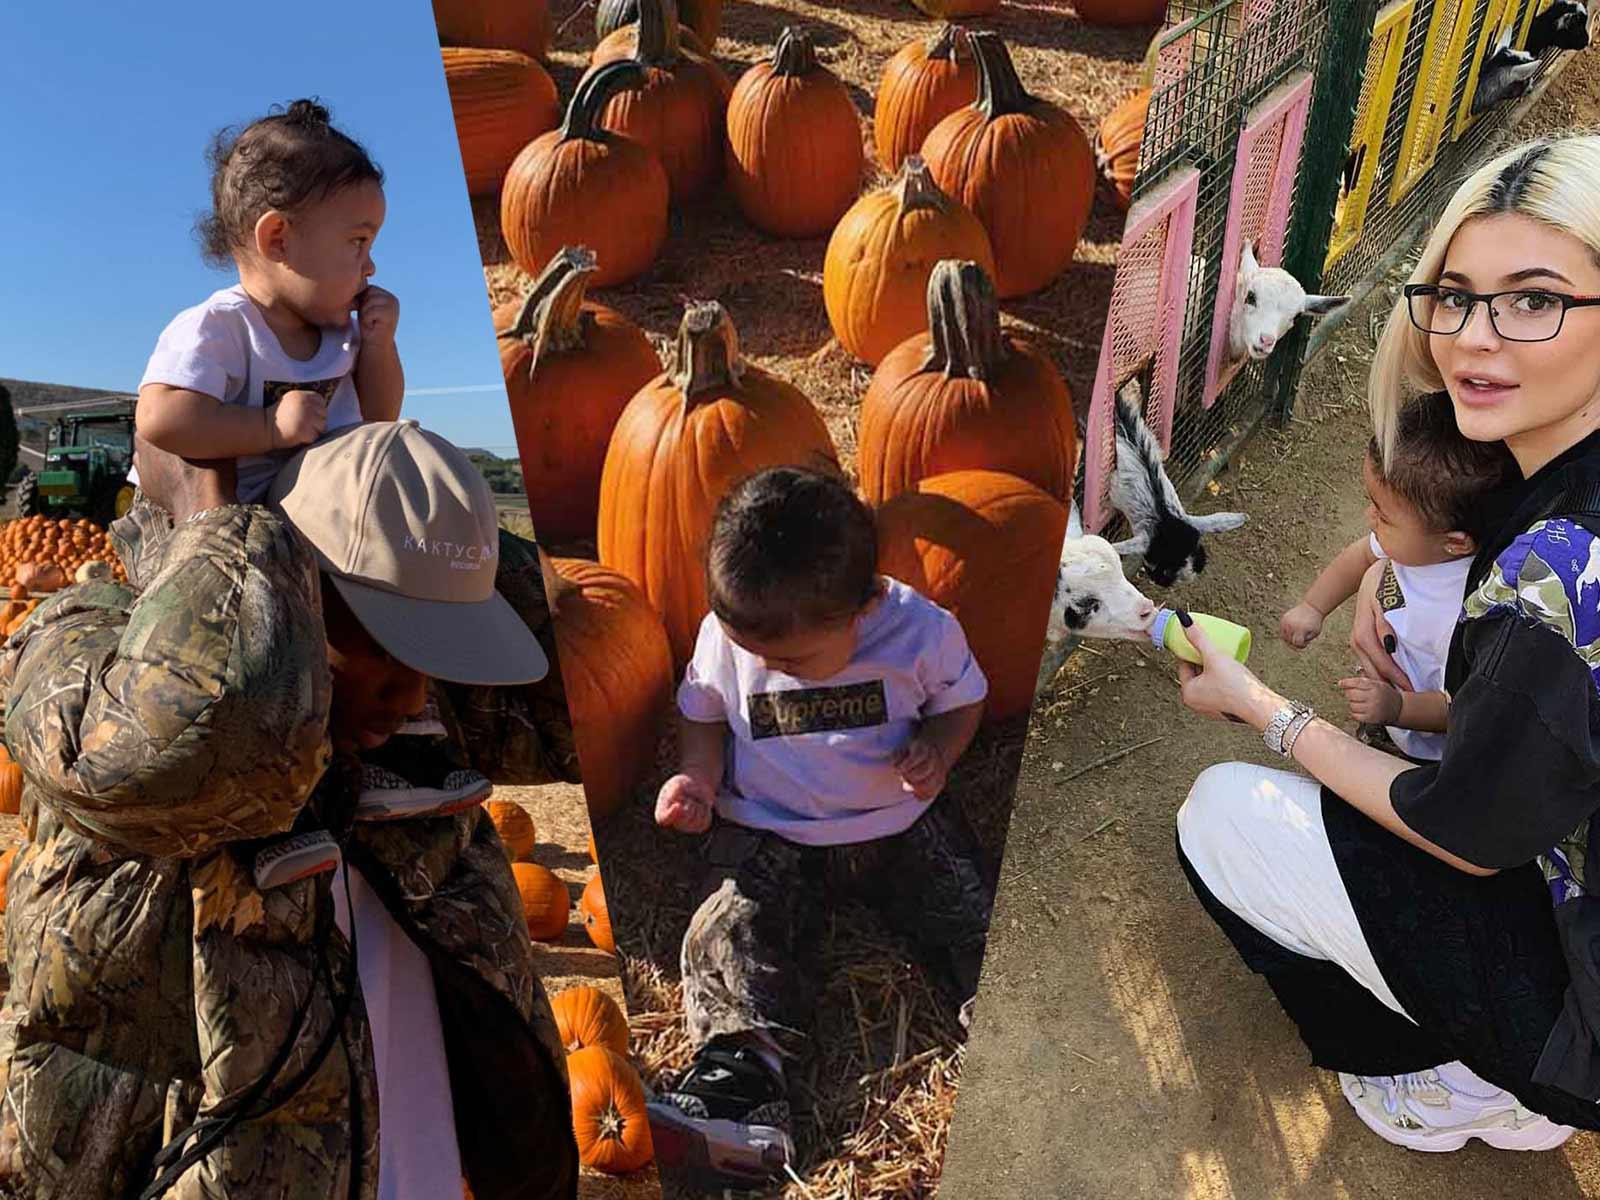 Kylie Jenner & Travis Scott Take Stormi To Her First Pumpkin Patch: Let’s Goooourd!